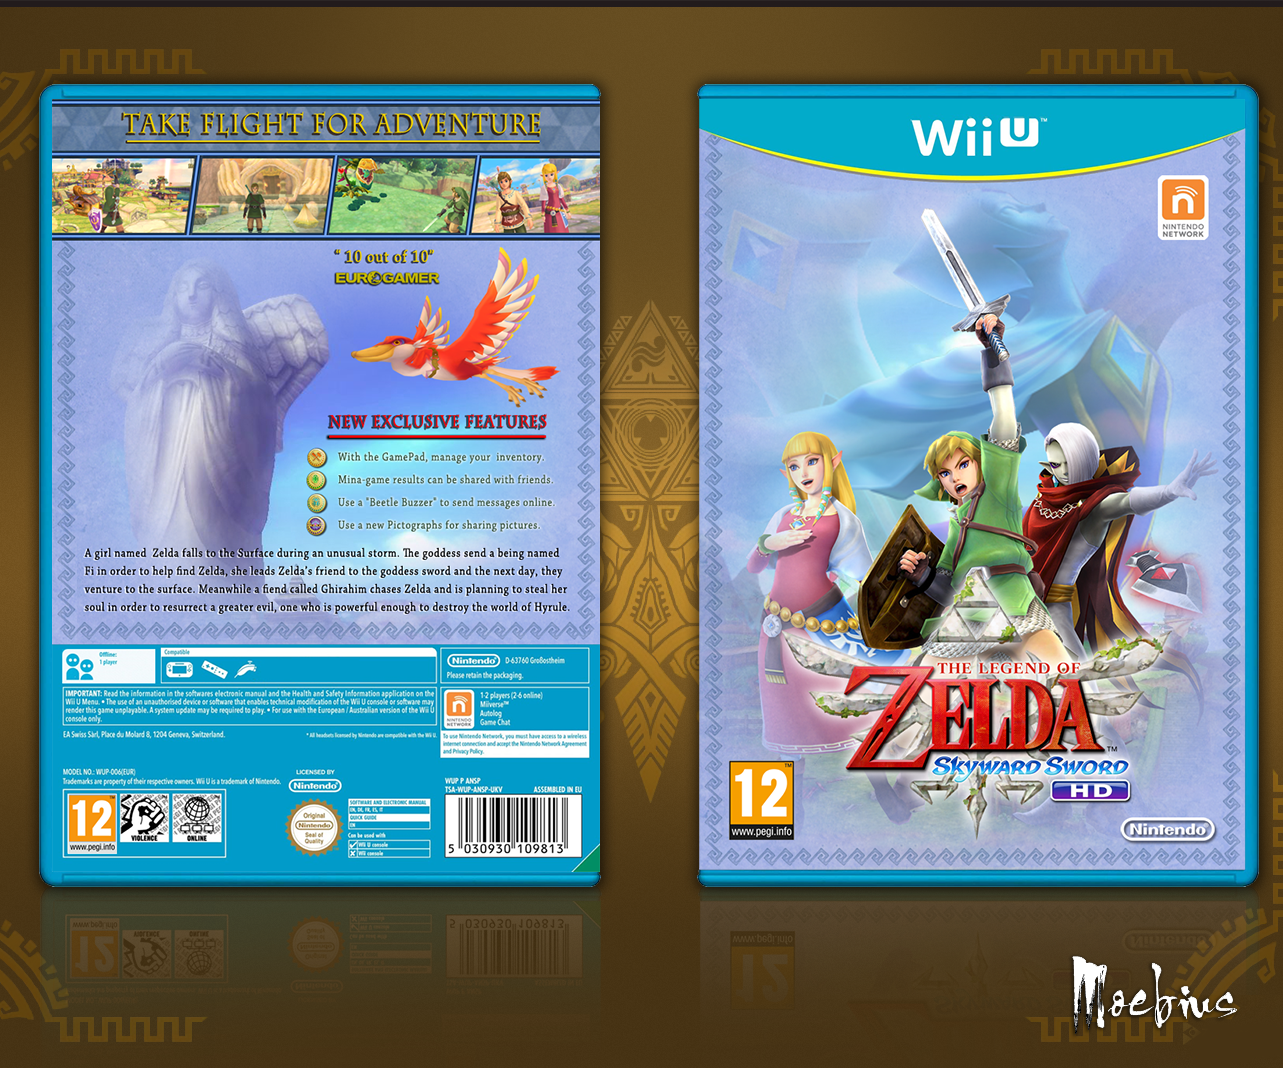 The Legend of Zelda: Skyward Sword HD box cover